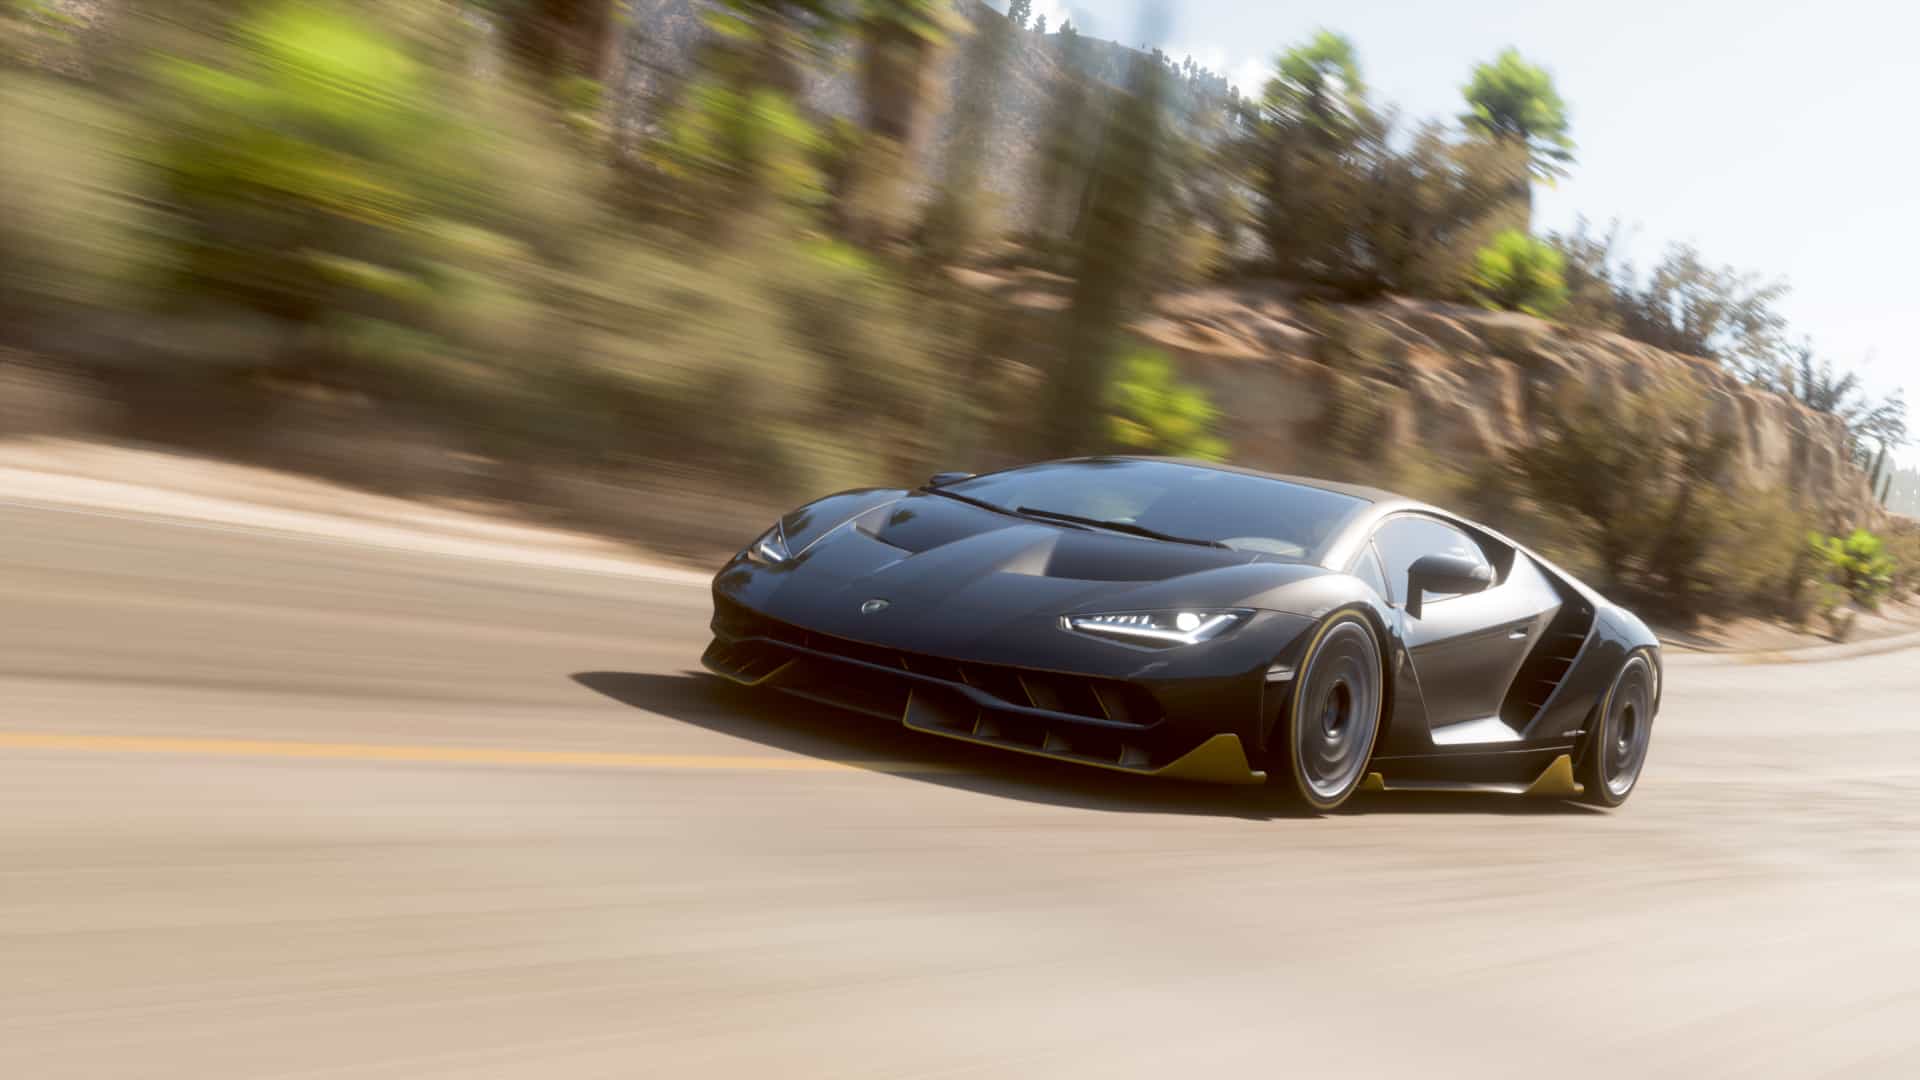 2016 Forza Horizon 3 Framed Print Ad/Poster PS4 Xbox One Lamborghini  Centenario